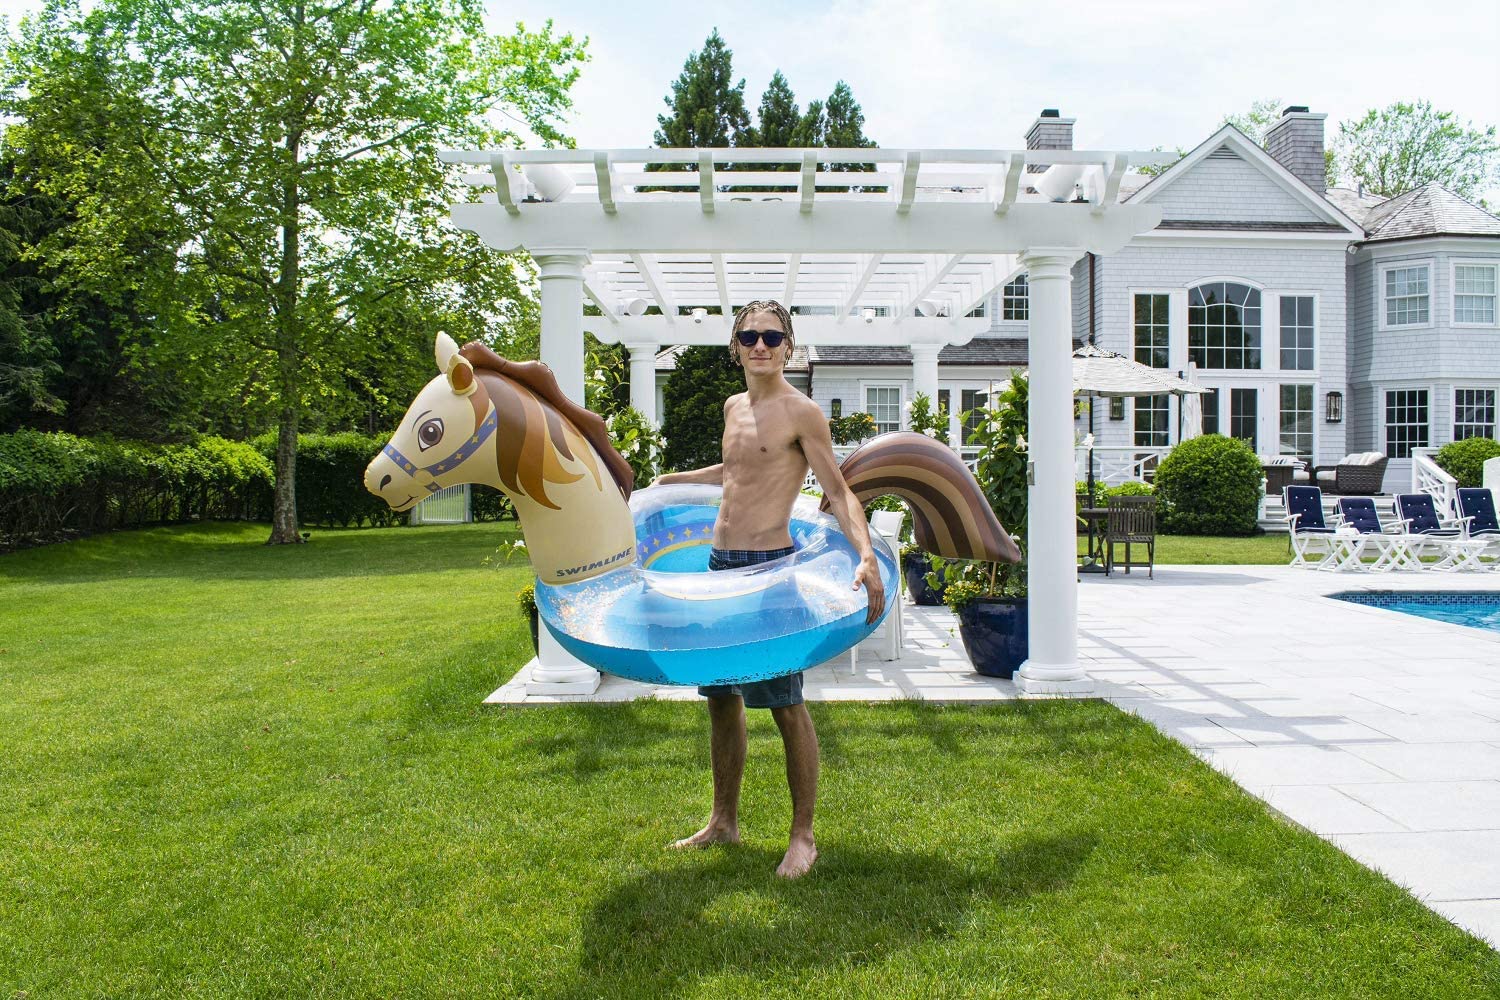 Swimline Hobby Horse Glitter Inflatable Pool Ring, Multi, 67"x 37" x 31"